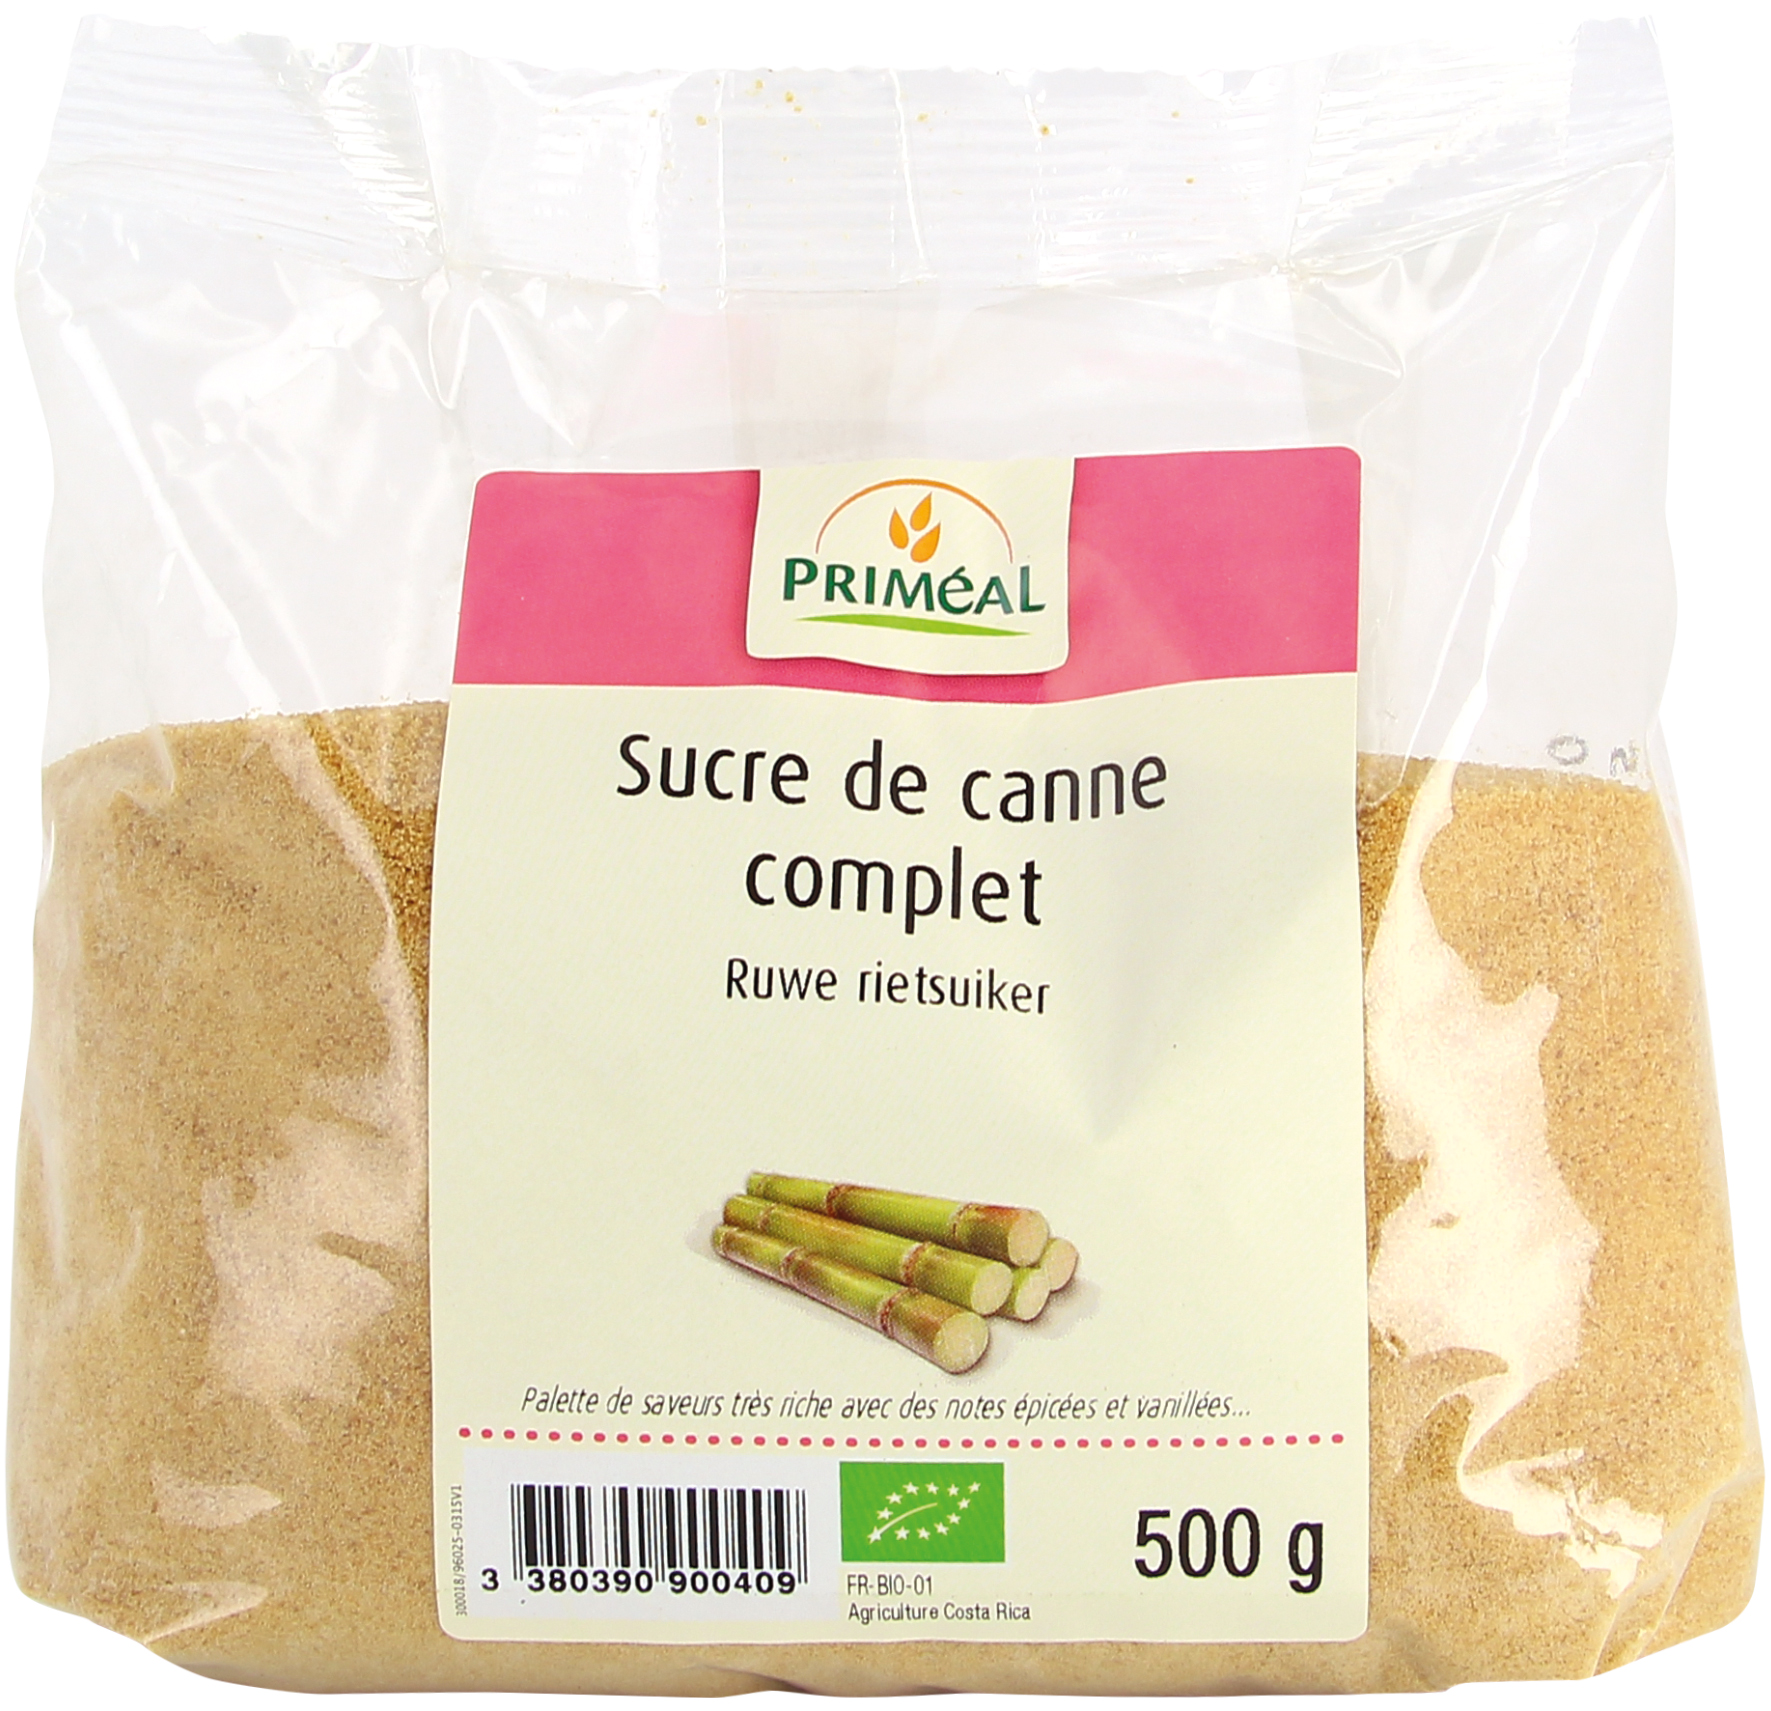 Primeal Whole cane sugar 500g